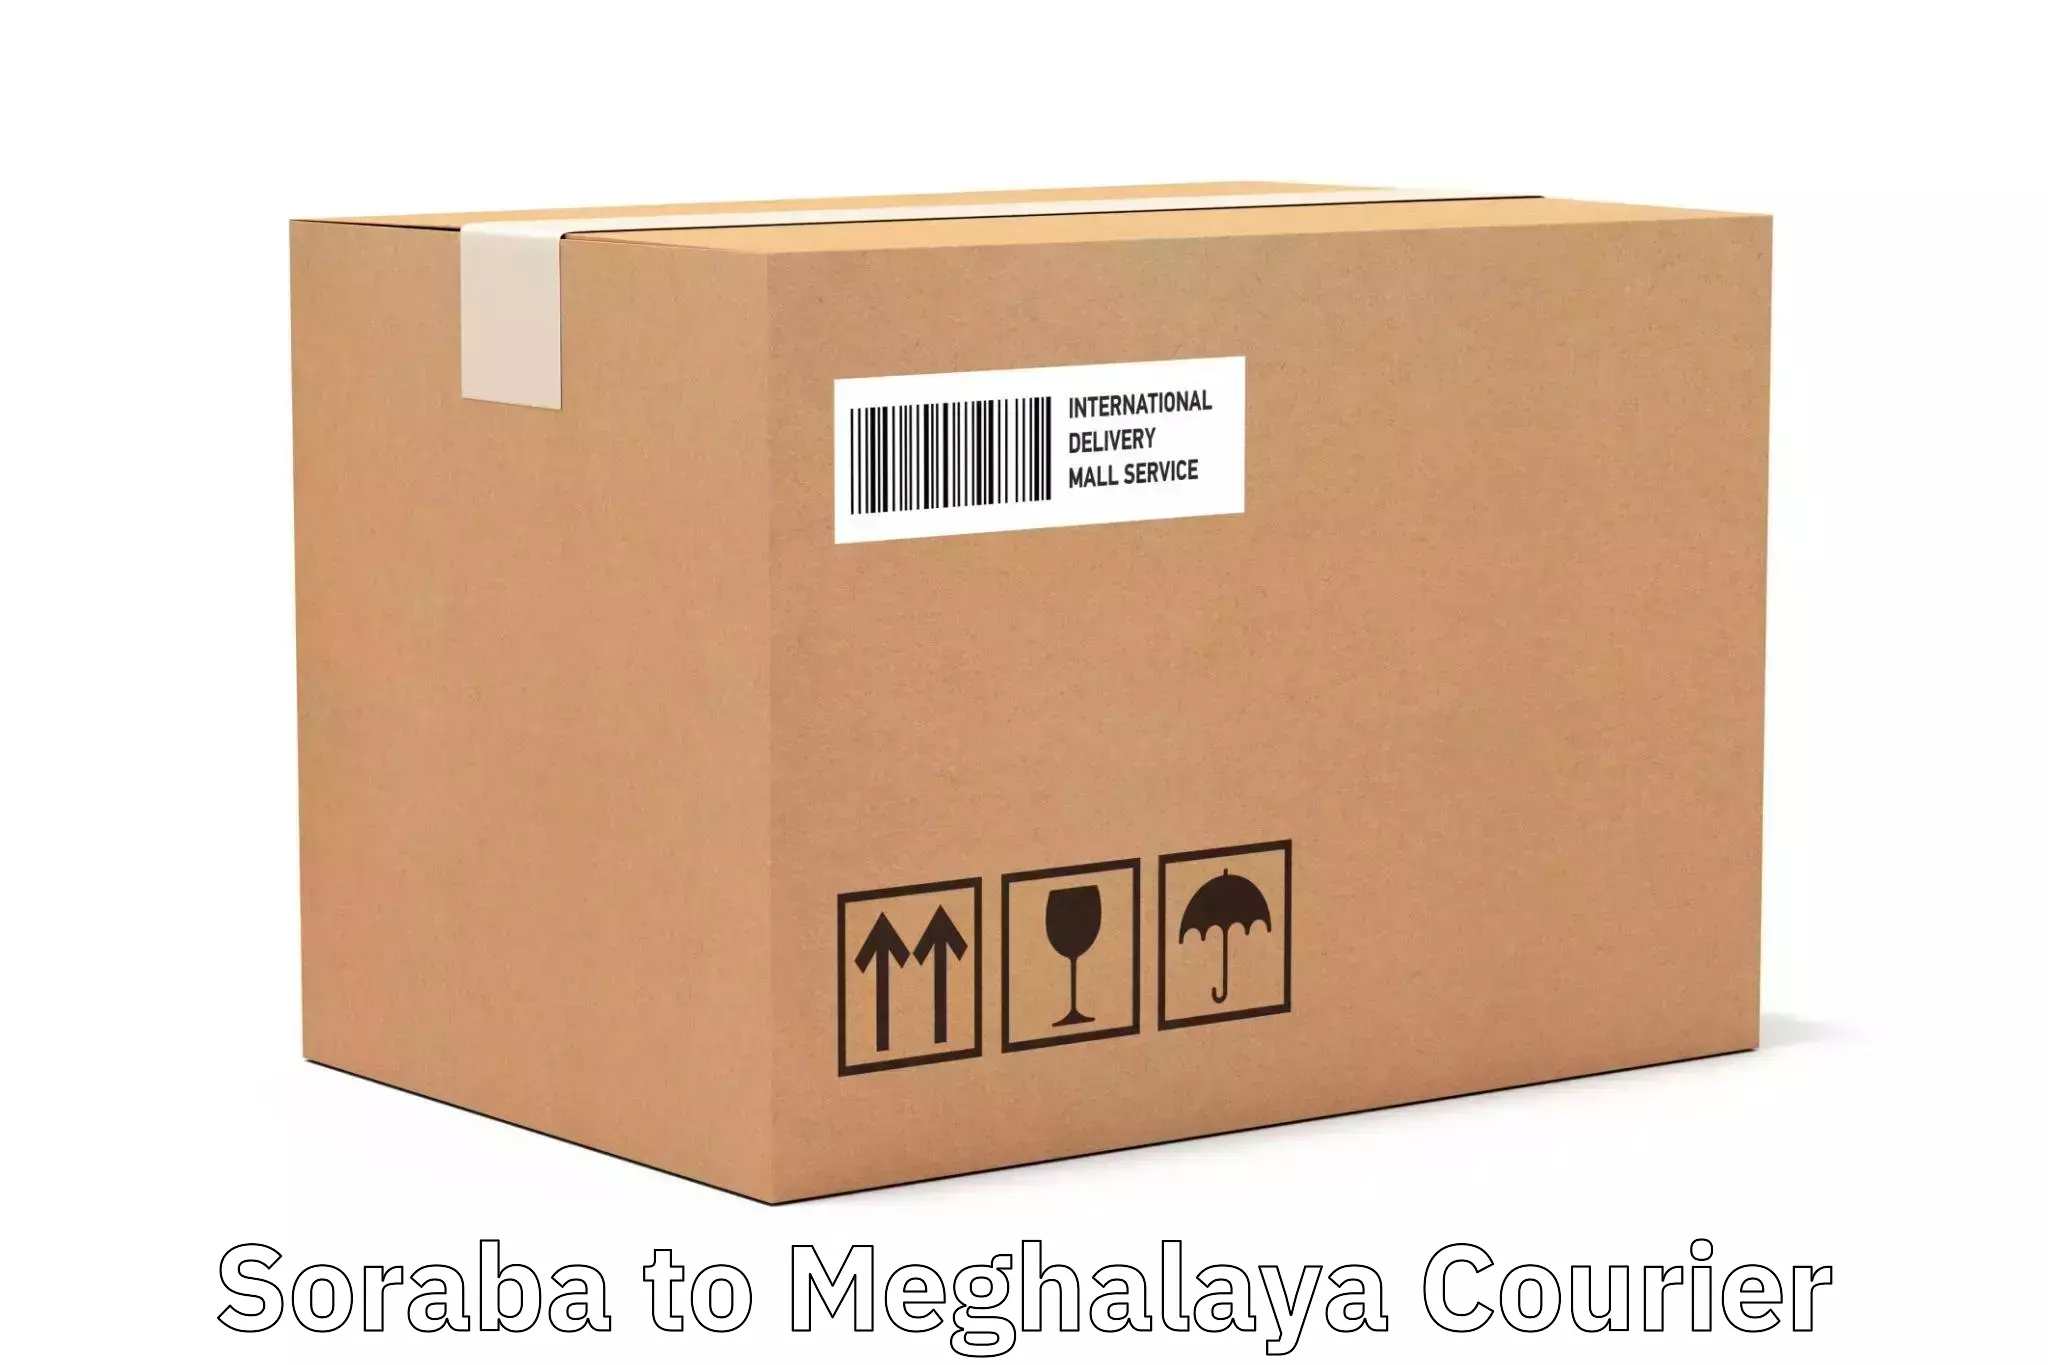 Personal parcel delivery Soraba to Cherrapunji